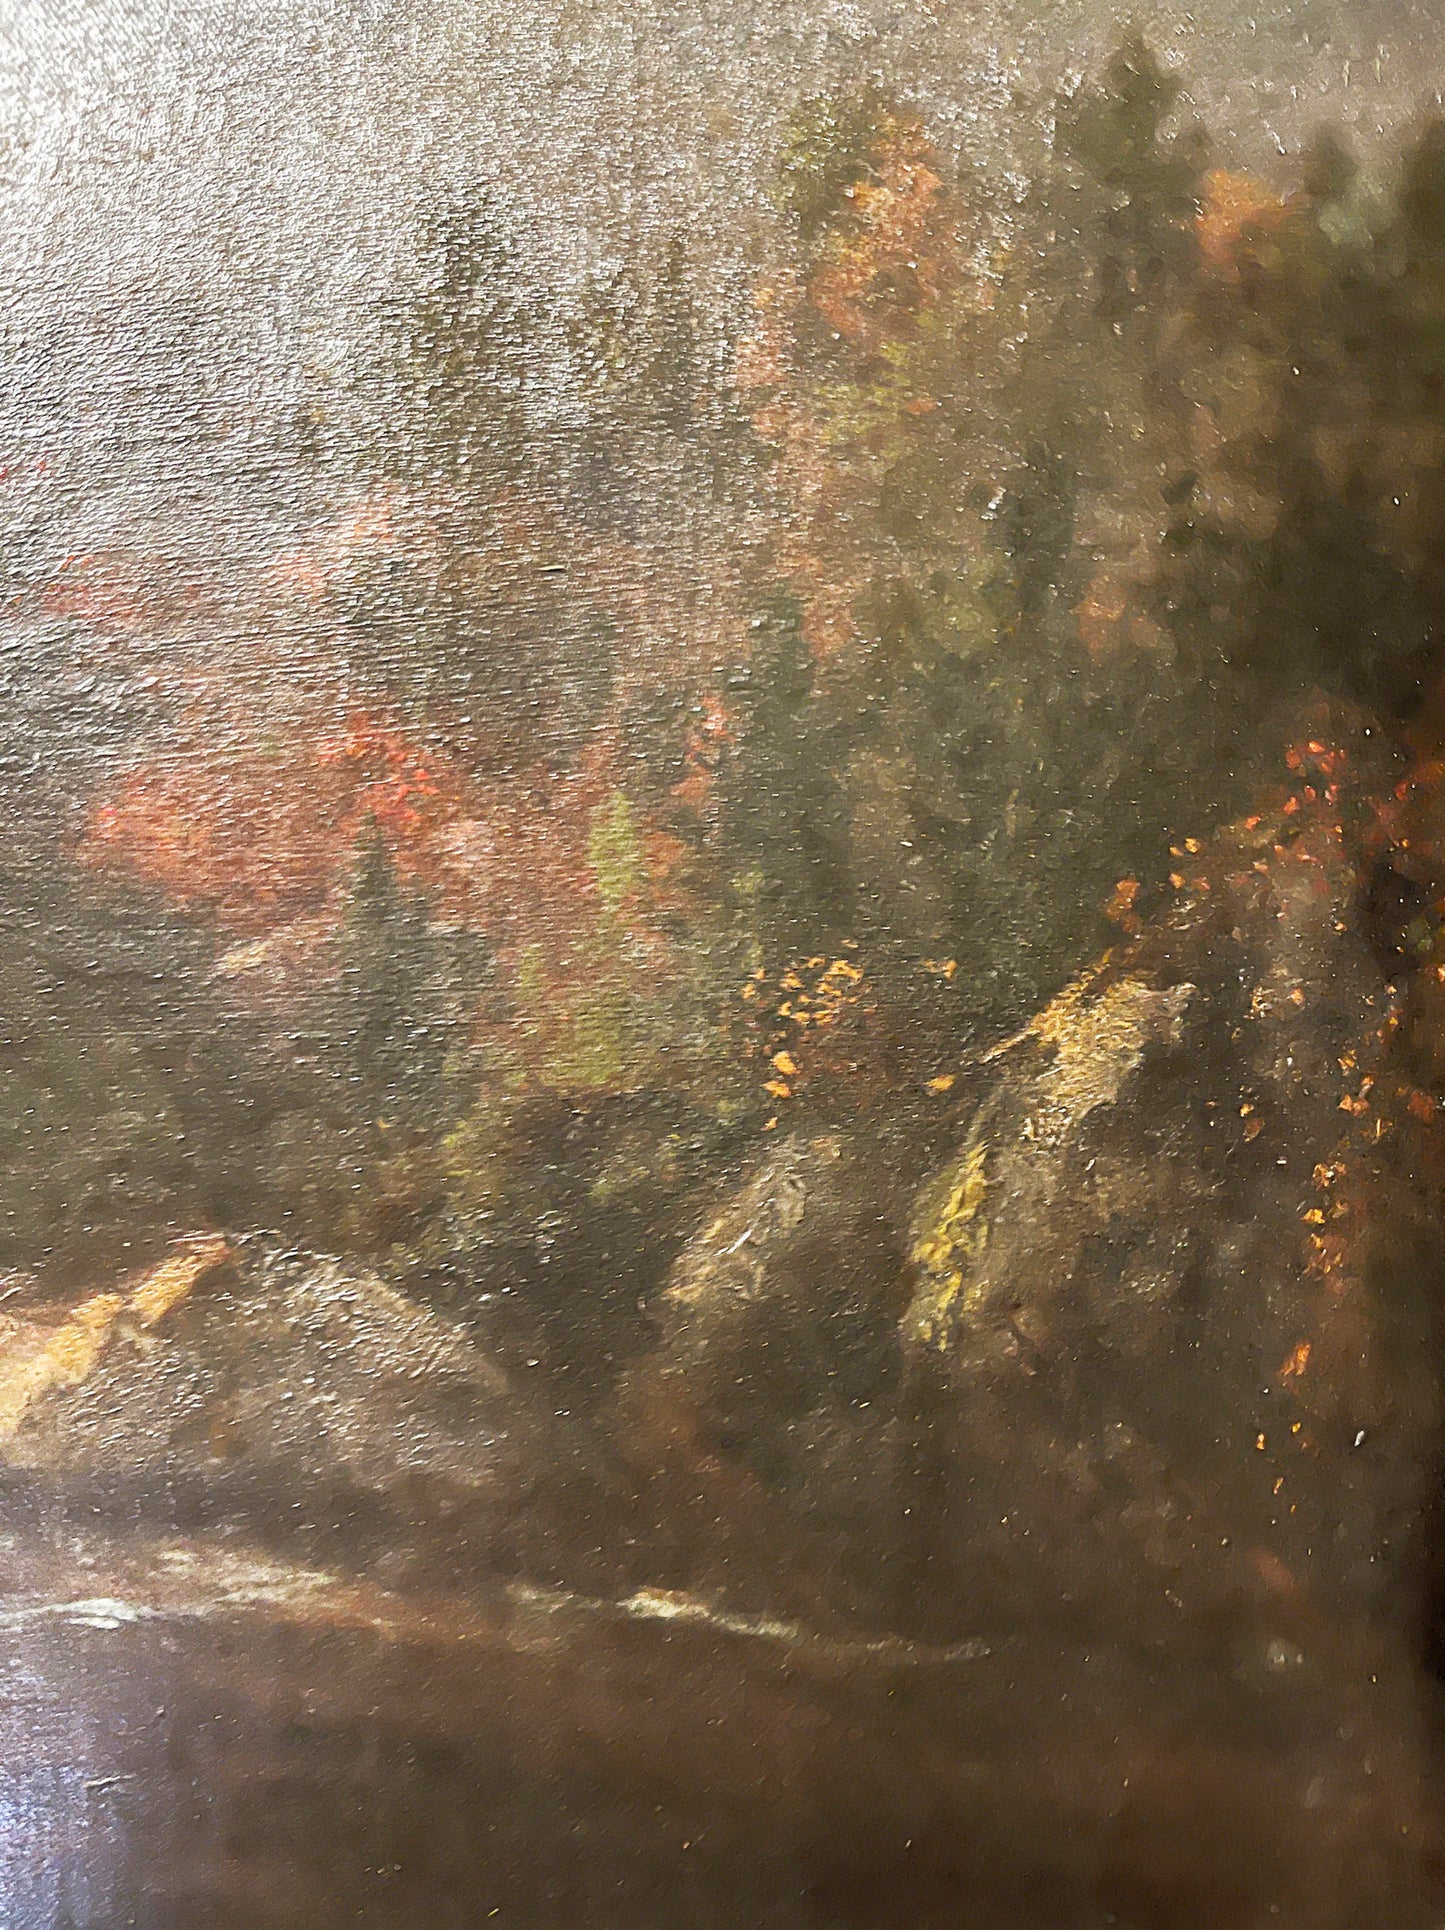 Hudson River School Oil Painting: Men fishing on a river